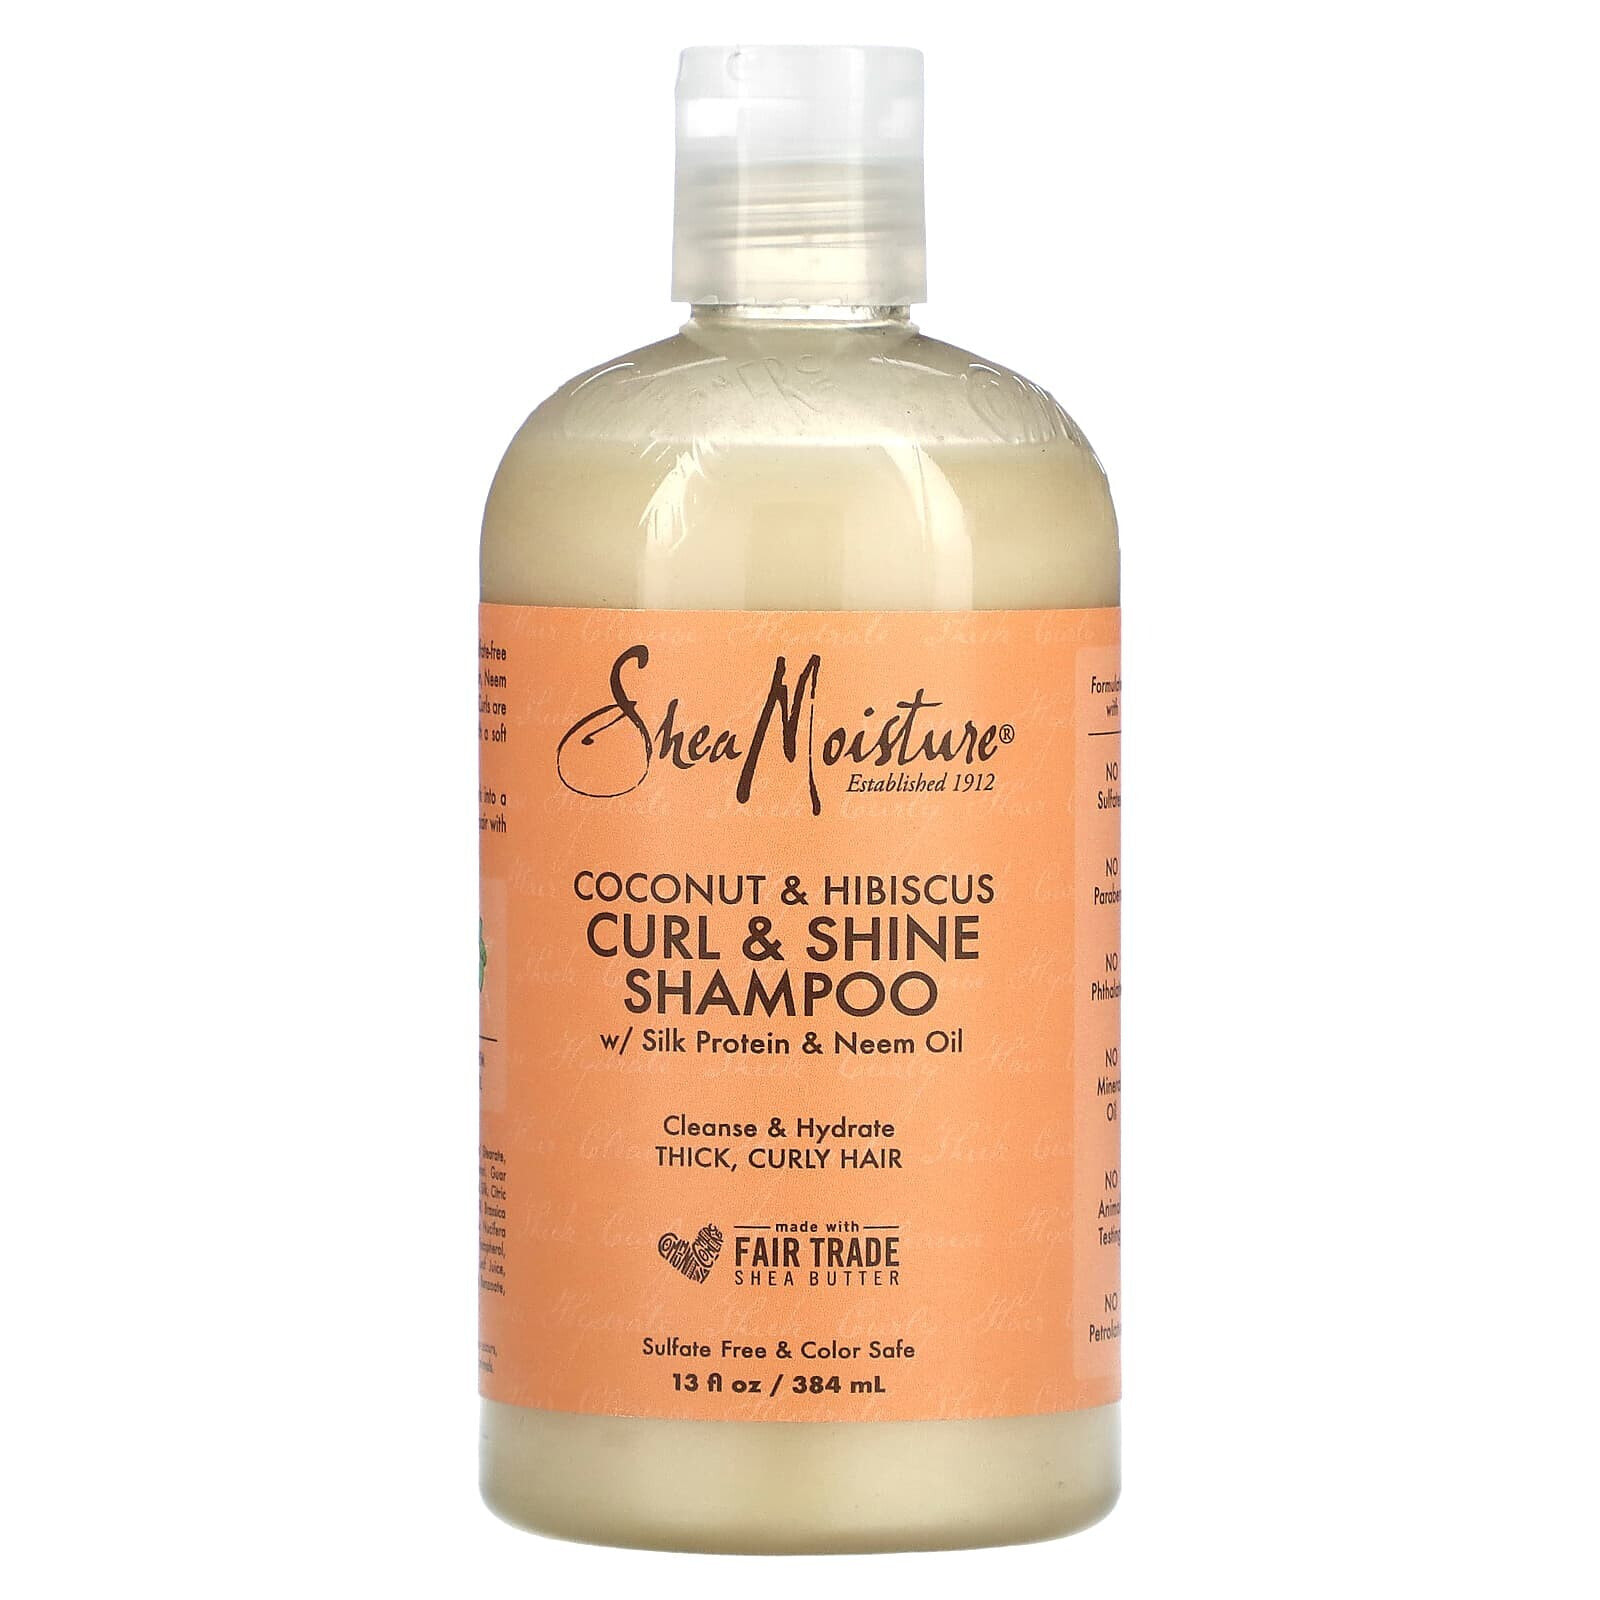 SheaMoisture, Curl & Shine Shampoo, Thick, Curly Hair, Coconut & Hibiscus, 3.2 fl oz (95 ml)